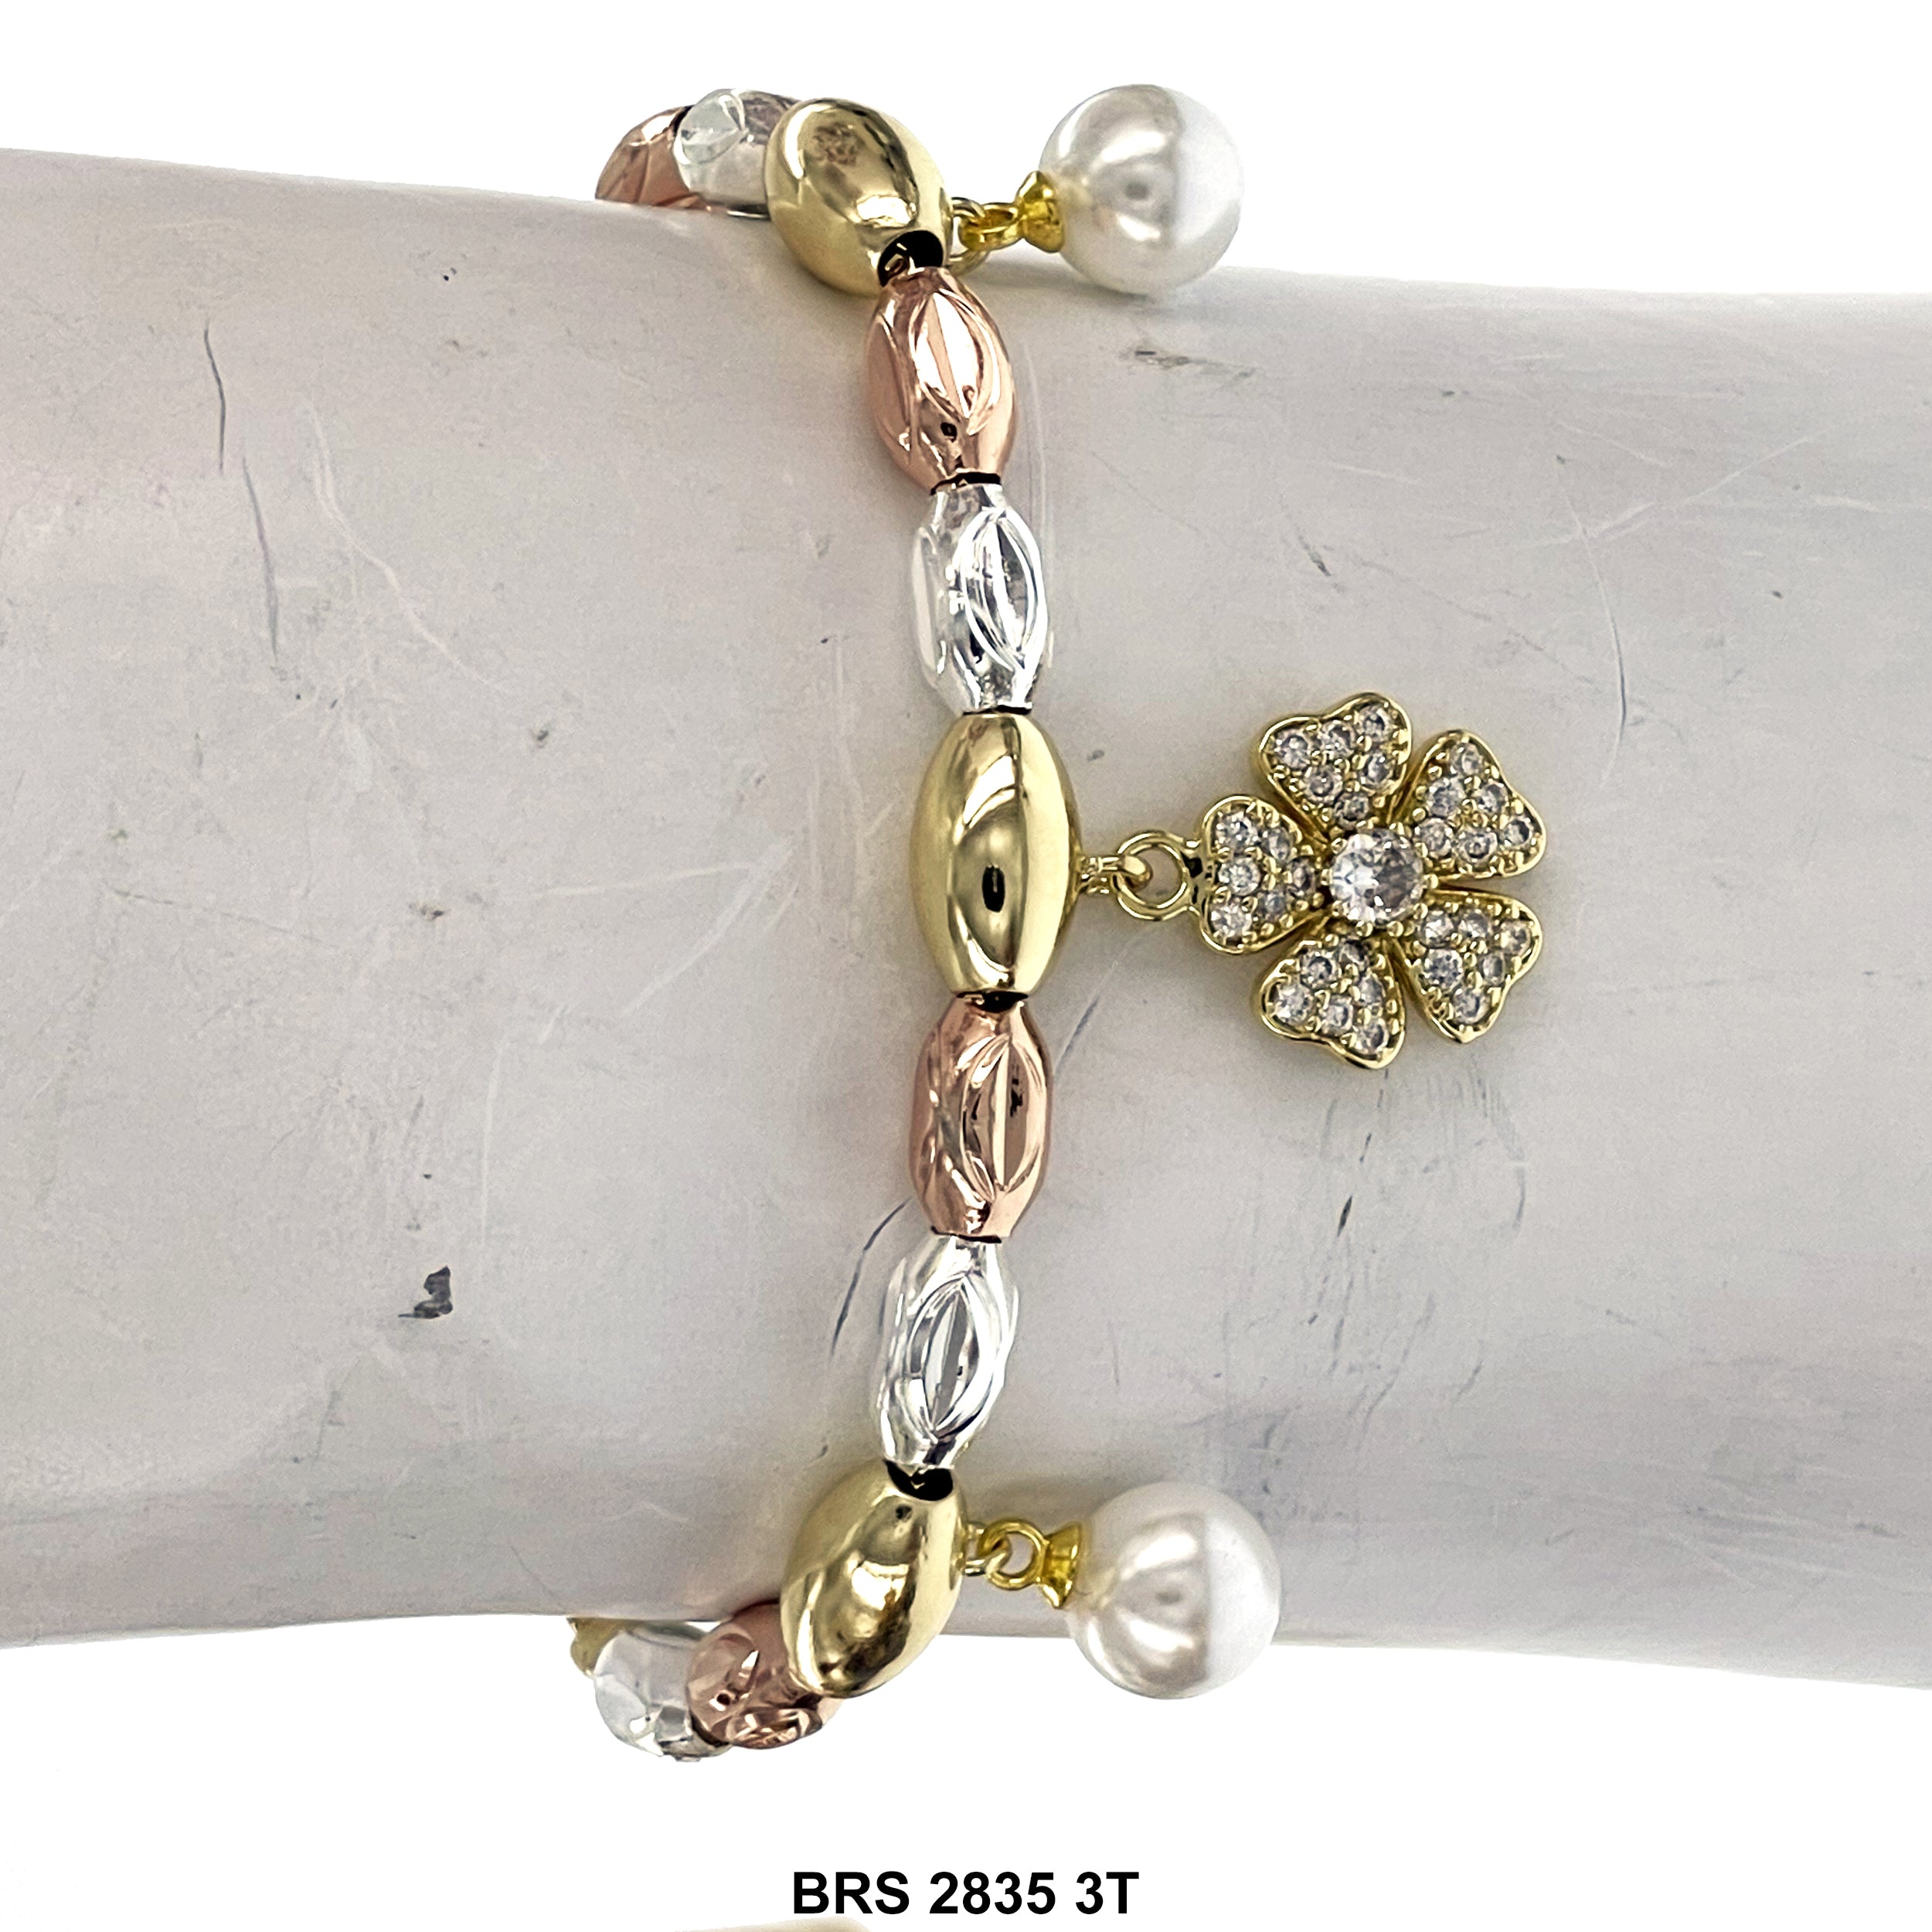 4-leaf-clover Pearl Charms Inlayed Oval Adjustable Bracelet BRS 2835 3T